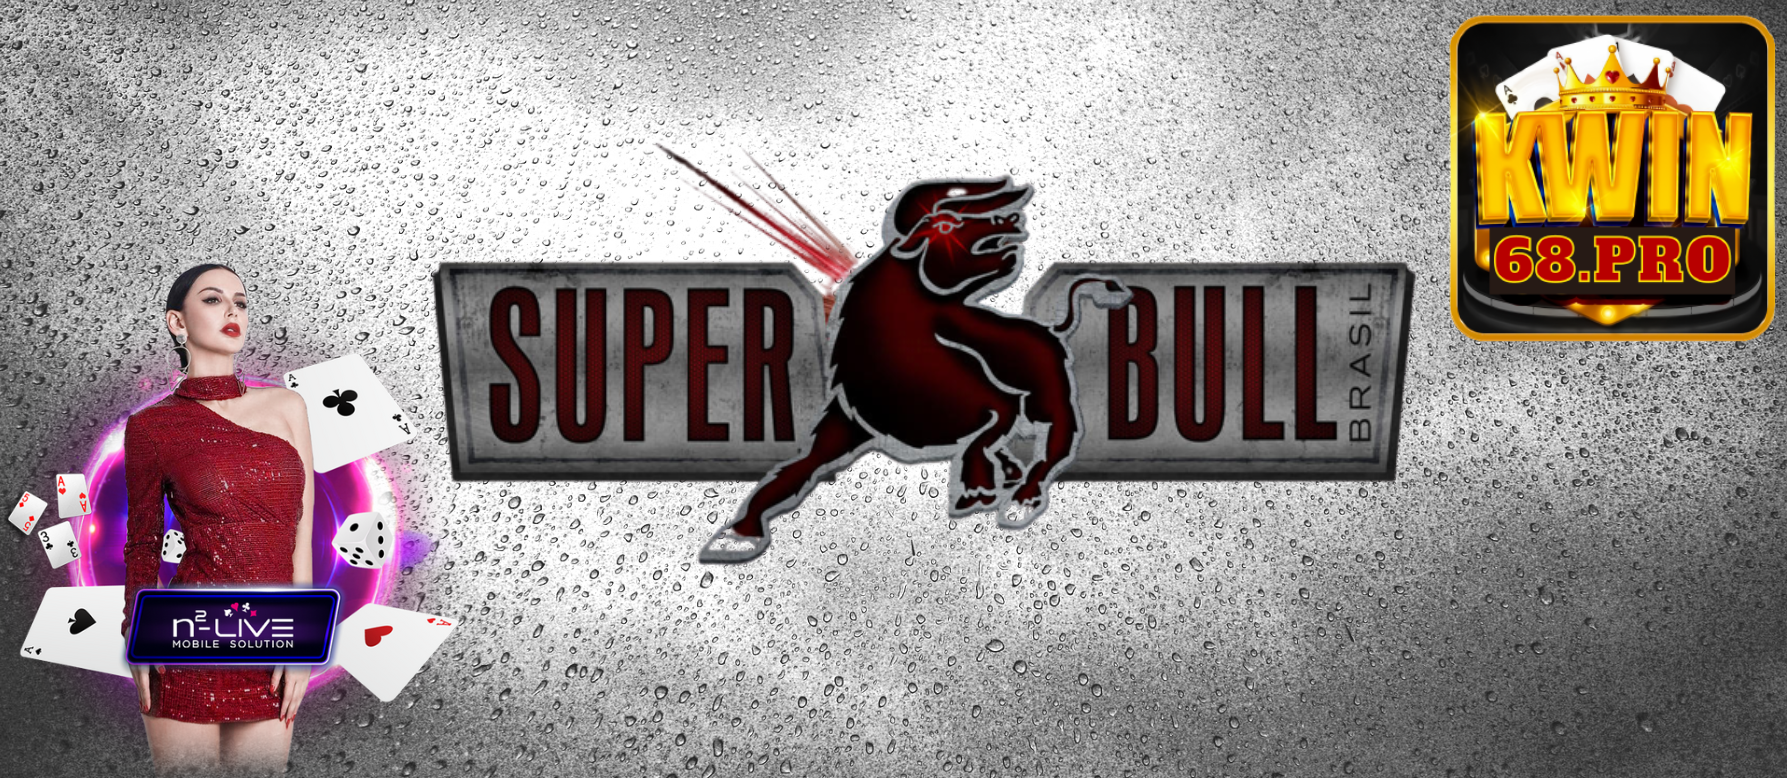 Game bài super bull kwin68